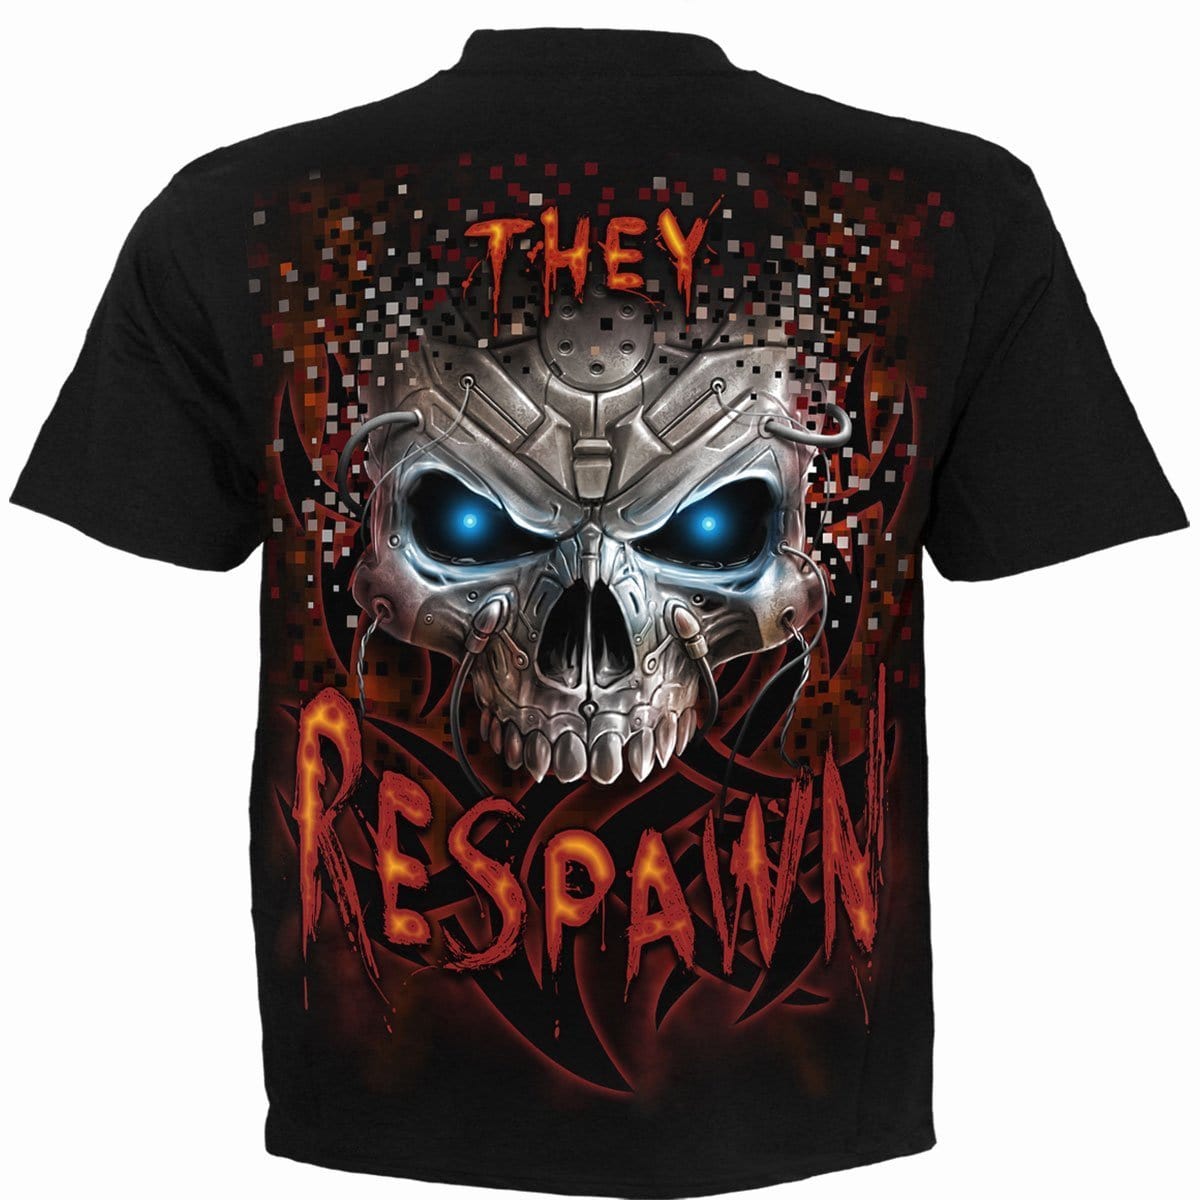 RESPAWN - T-Shirt Black - Spiral USA